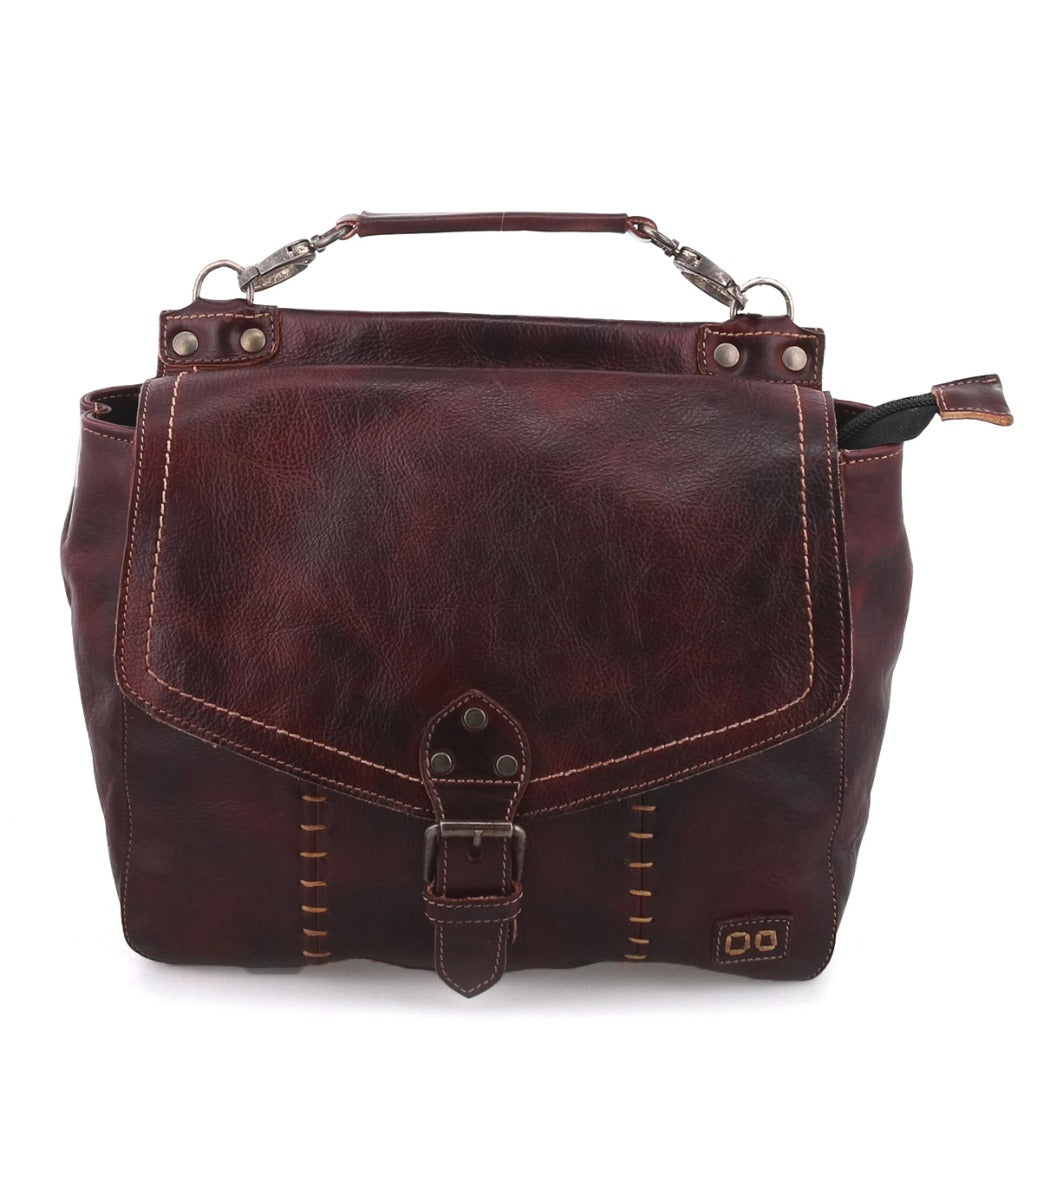 The Bed Stu Bathsheba burgundy leather satchel bag.